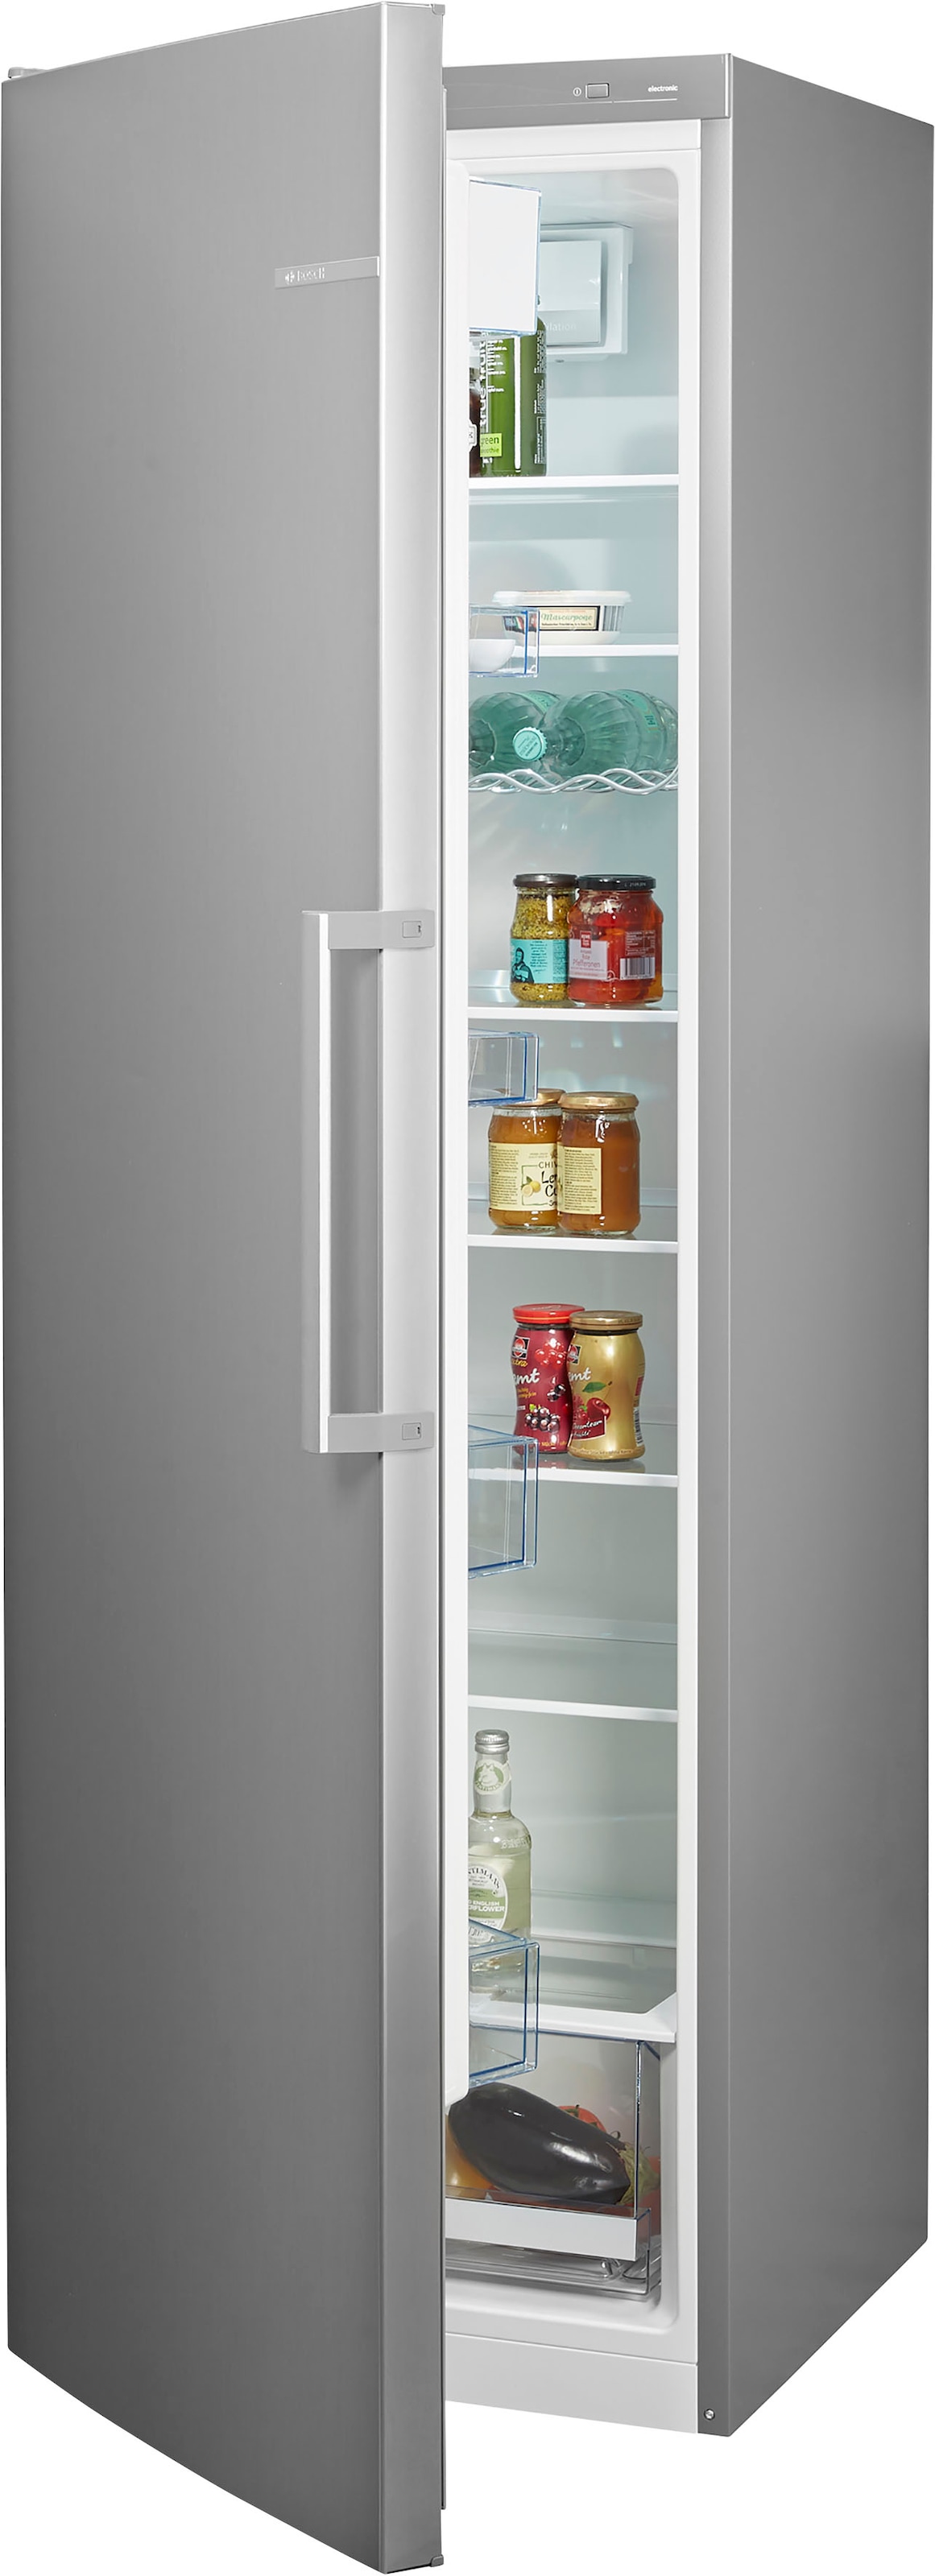 BOSCH Kühlschrank "KSV36VLDP", KSV36VLDP, 186 cm hoch, 60 cm breit